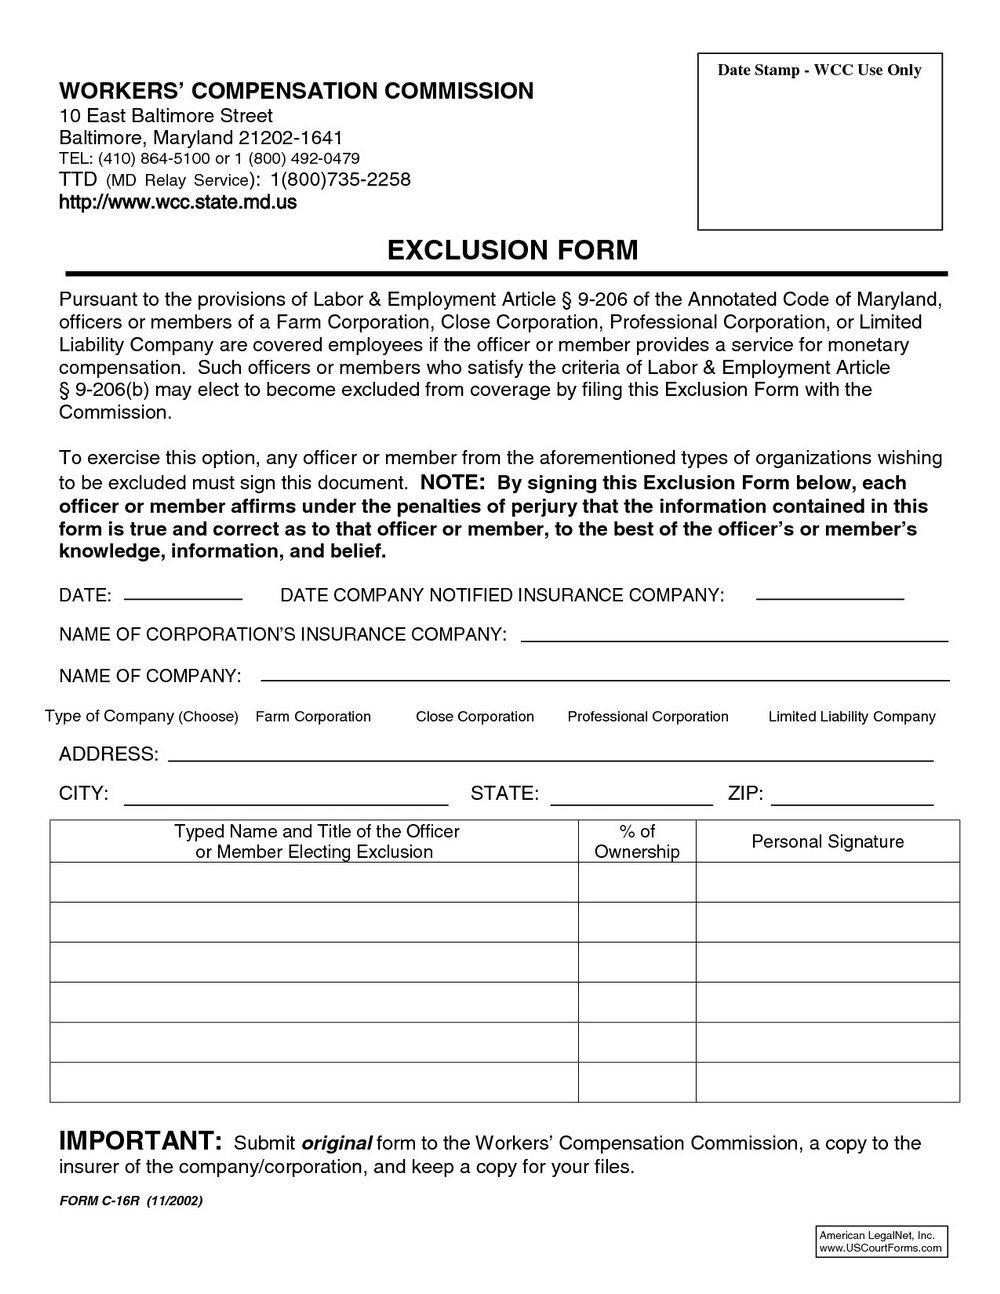 Workers Comp Exemption form Michigan Workmans P Exemption form Florida forms 6119